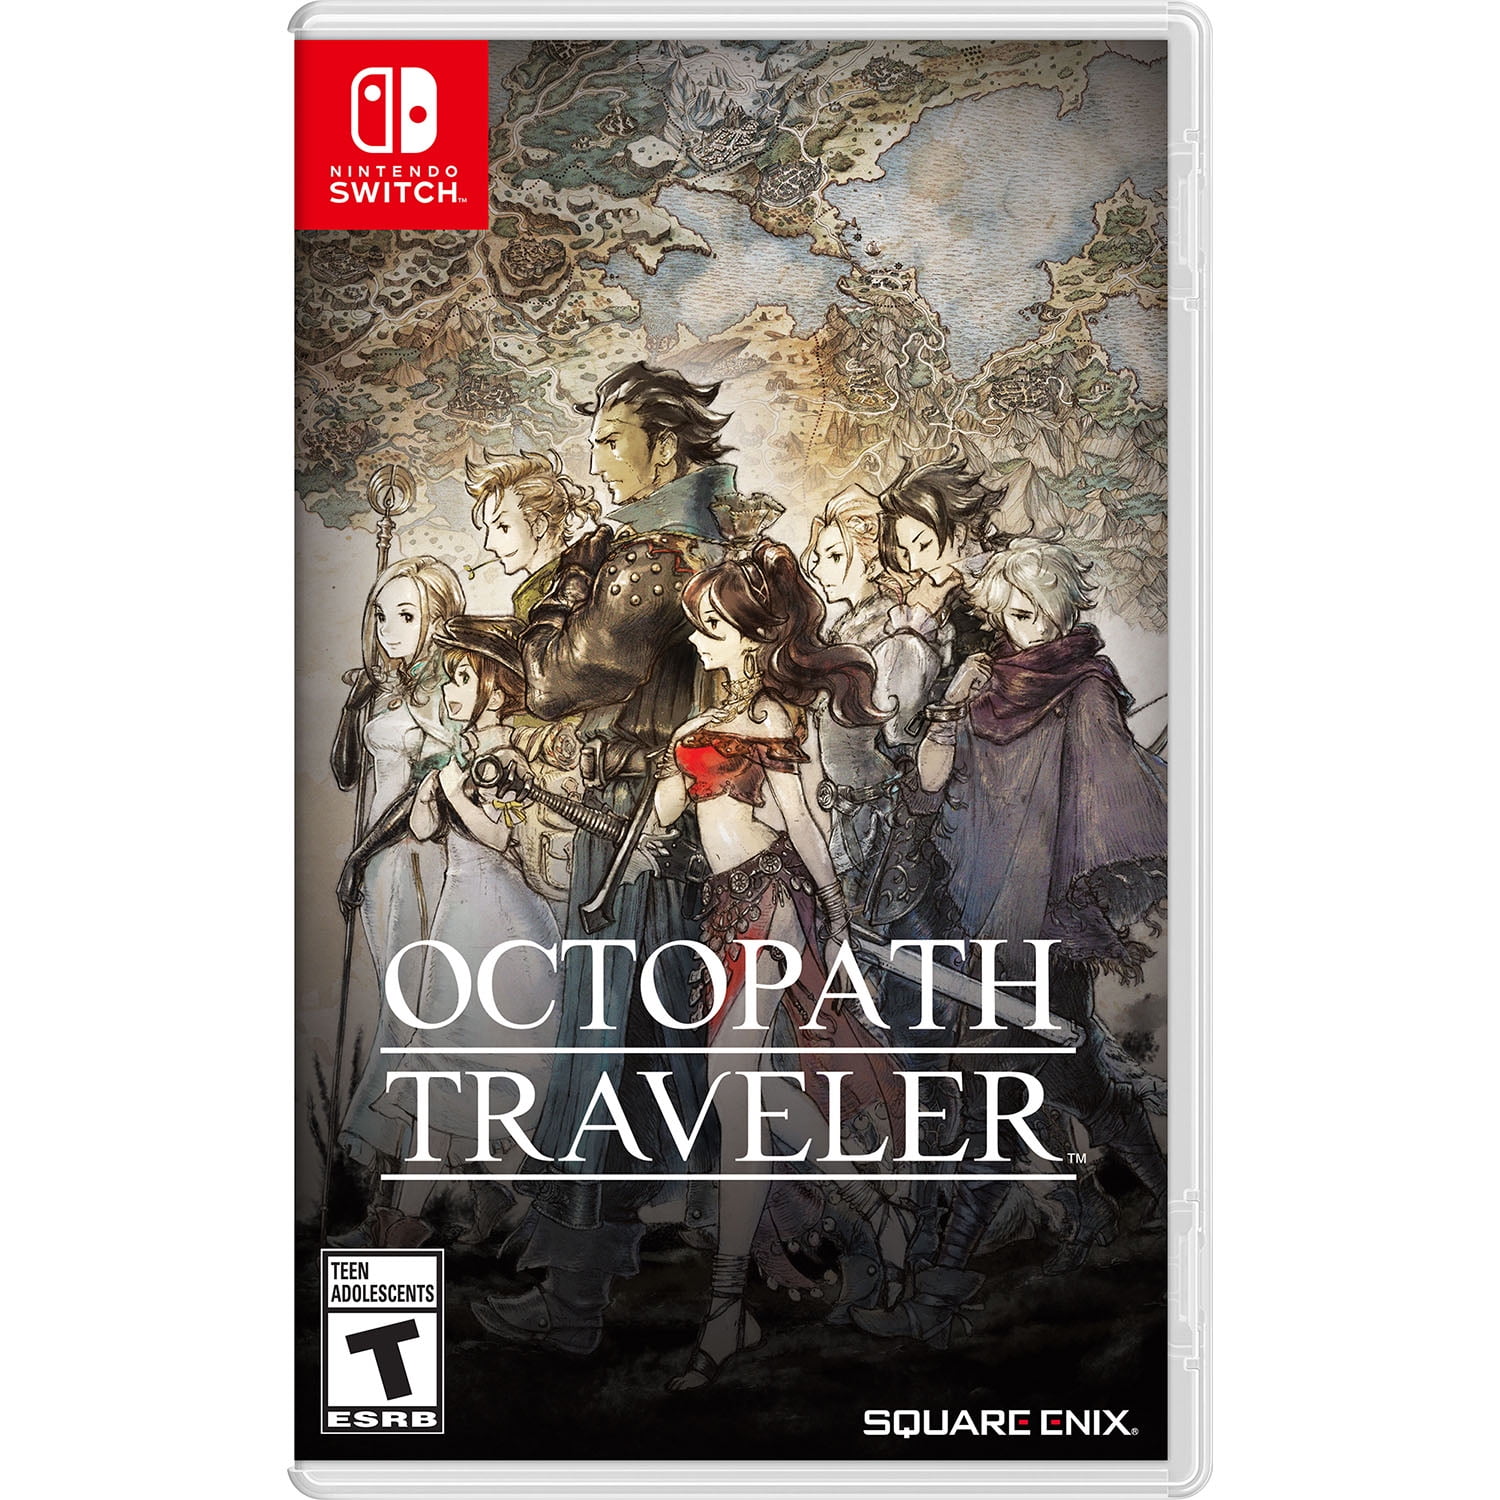 Octopath Traveler, Square Enix 